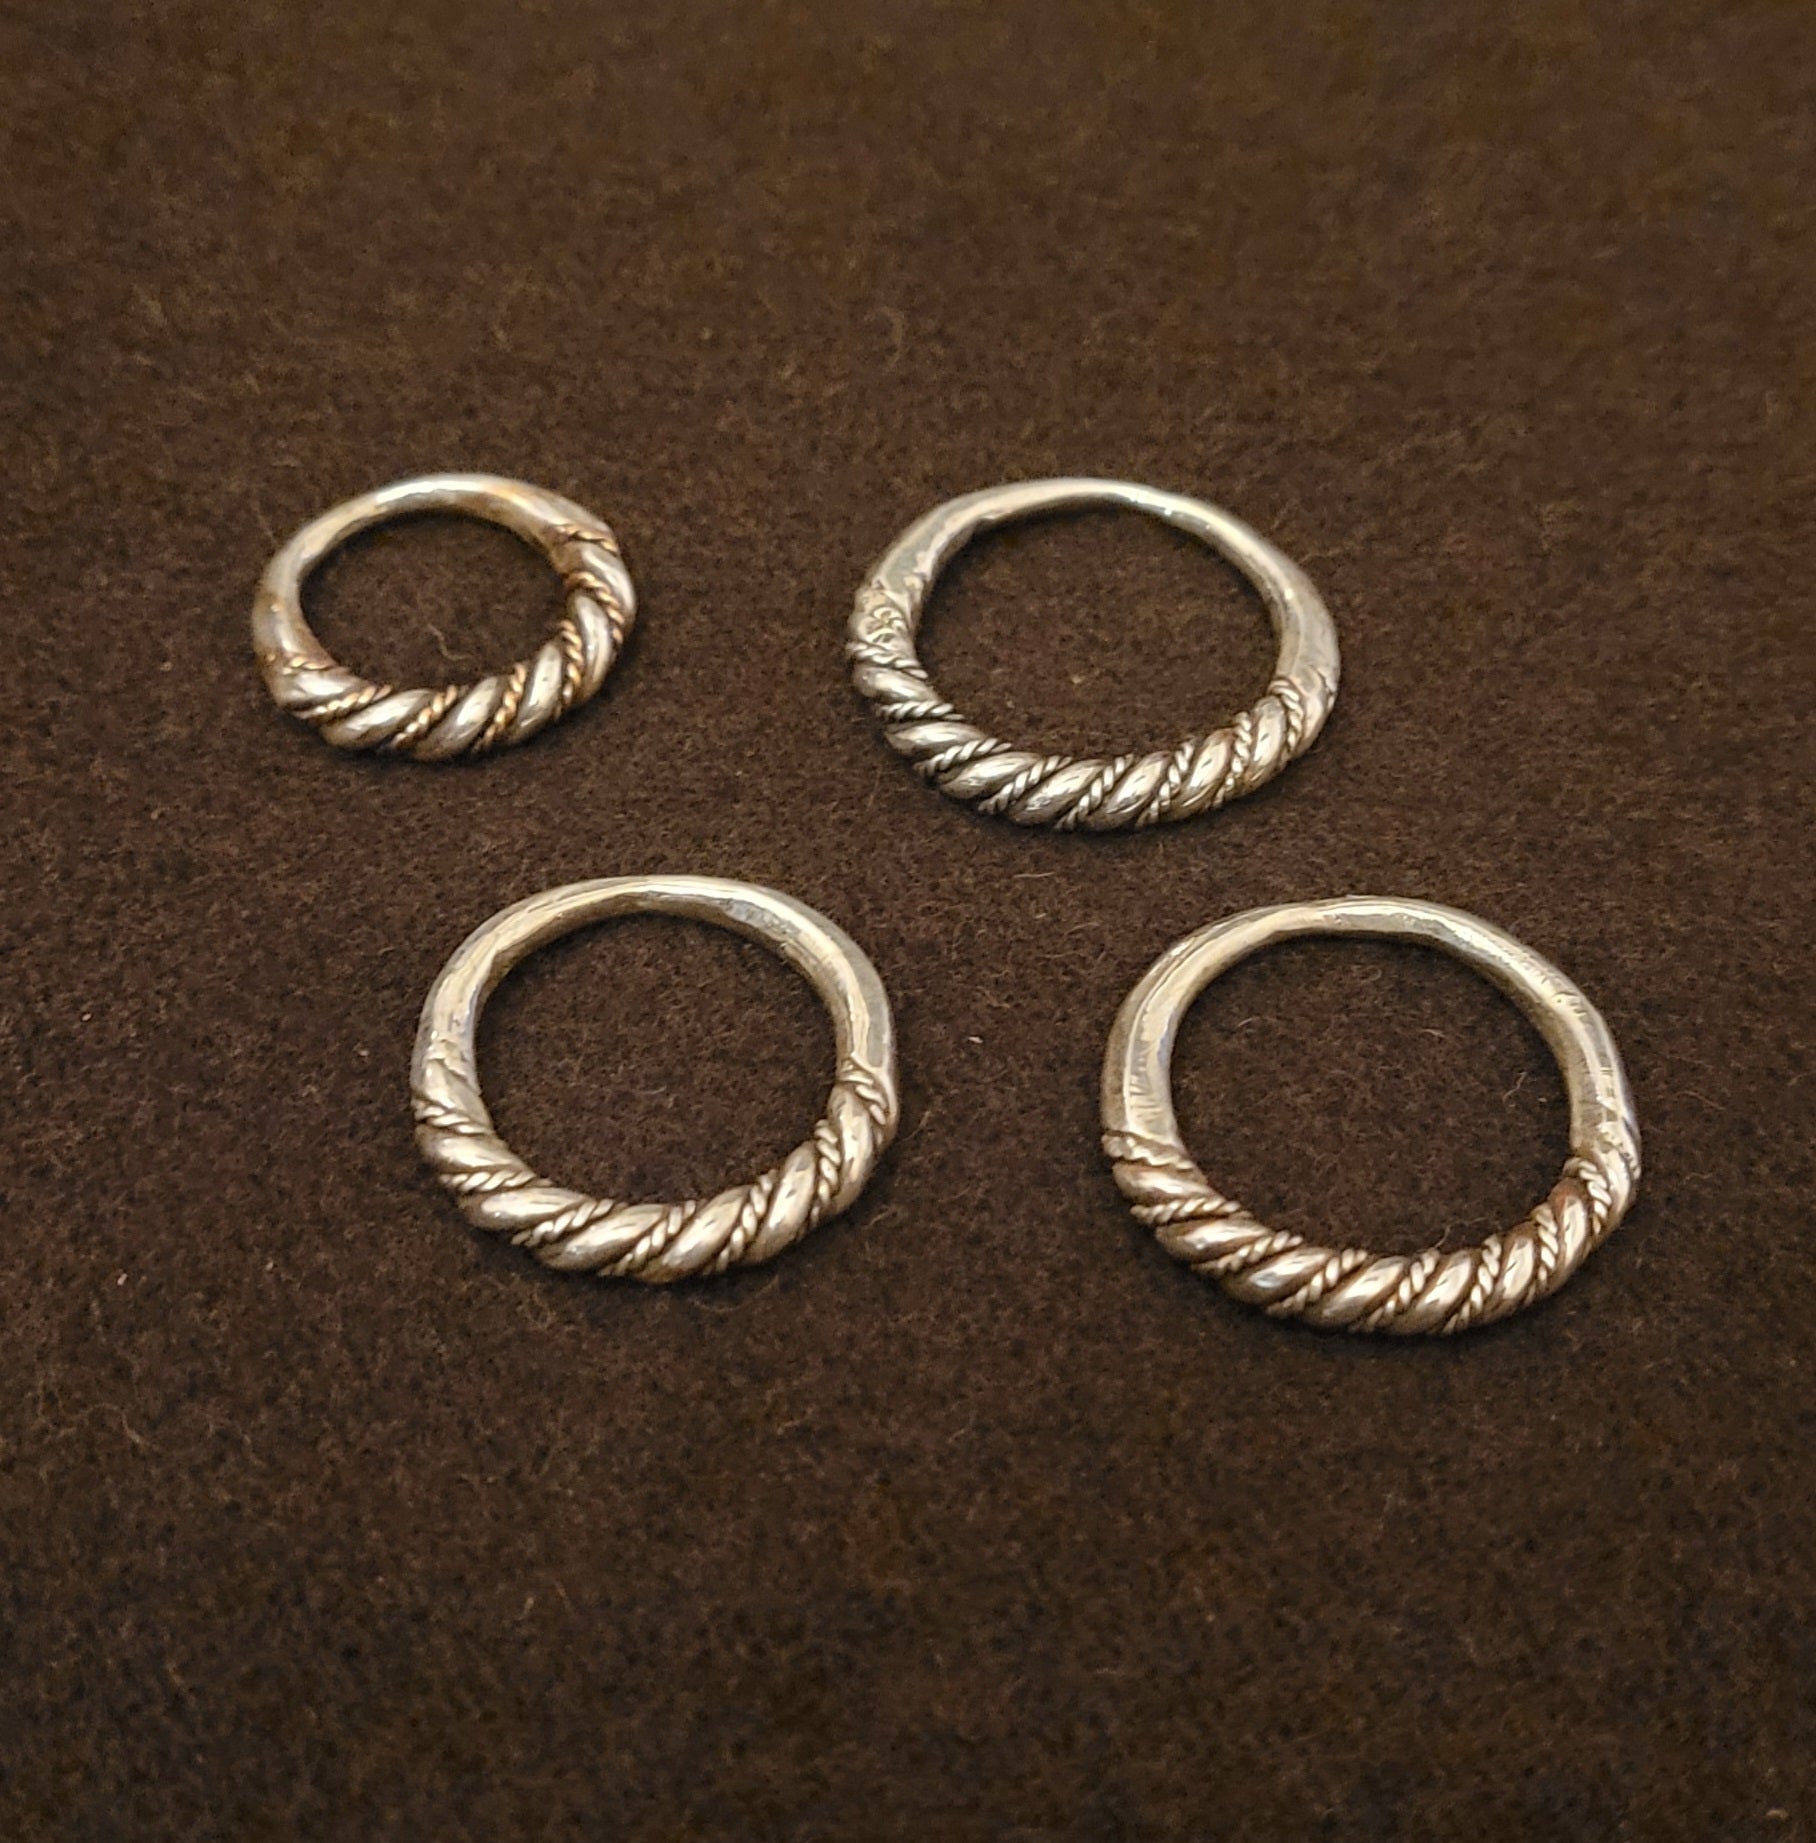 Twist ring in sterling silver